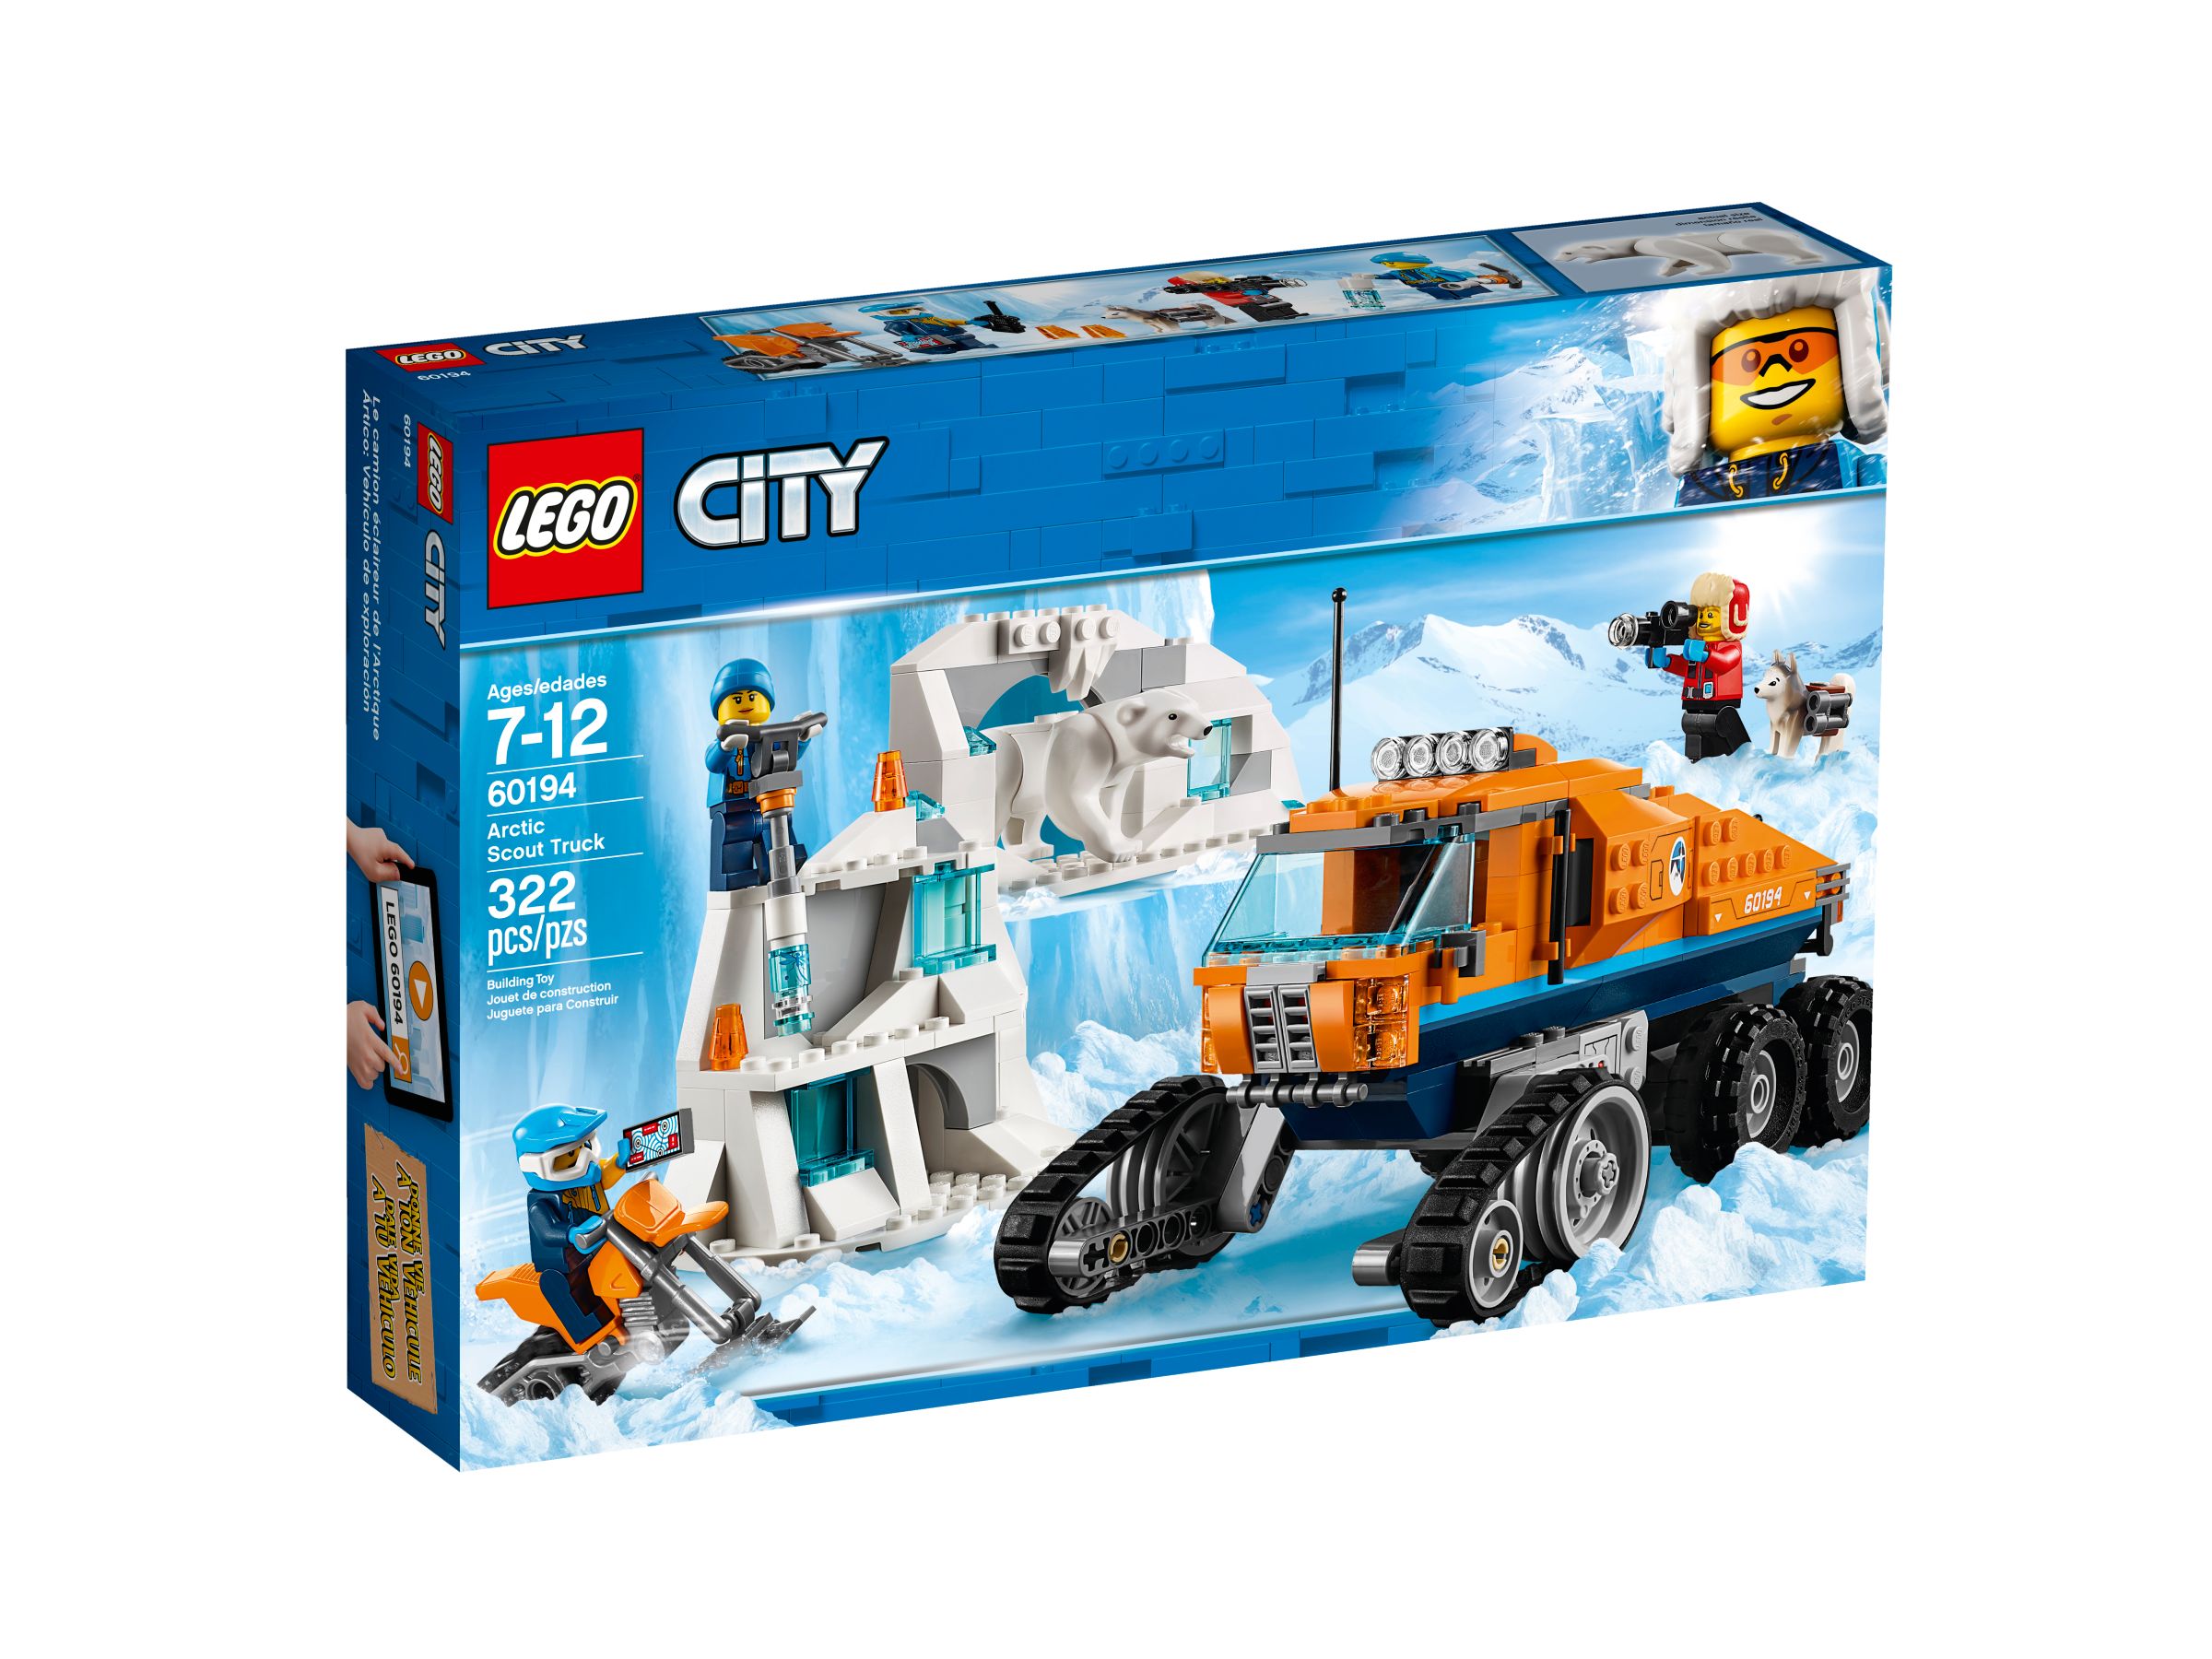 LEGO City 60194 Arktis-Erkundungstruck LEGO_60194_alt1.jpg